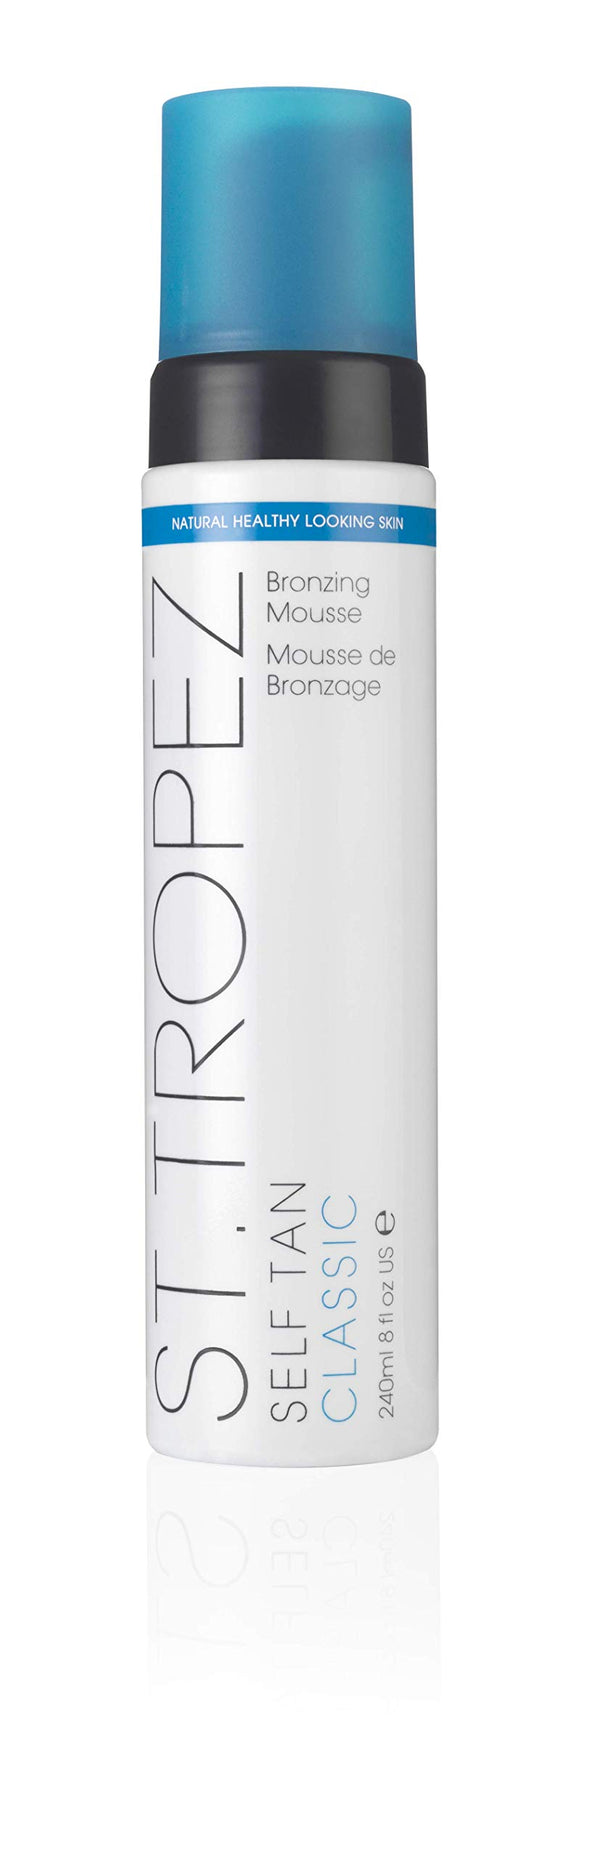 St.Tropez Fake Tan, Self Tan Classic Original Bronzing Mousse, 240 ml, Vegan Tanning Mousse, 100 Percent Natural Tanning Active, 10 Day Tan